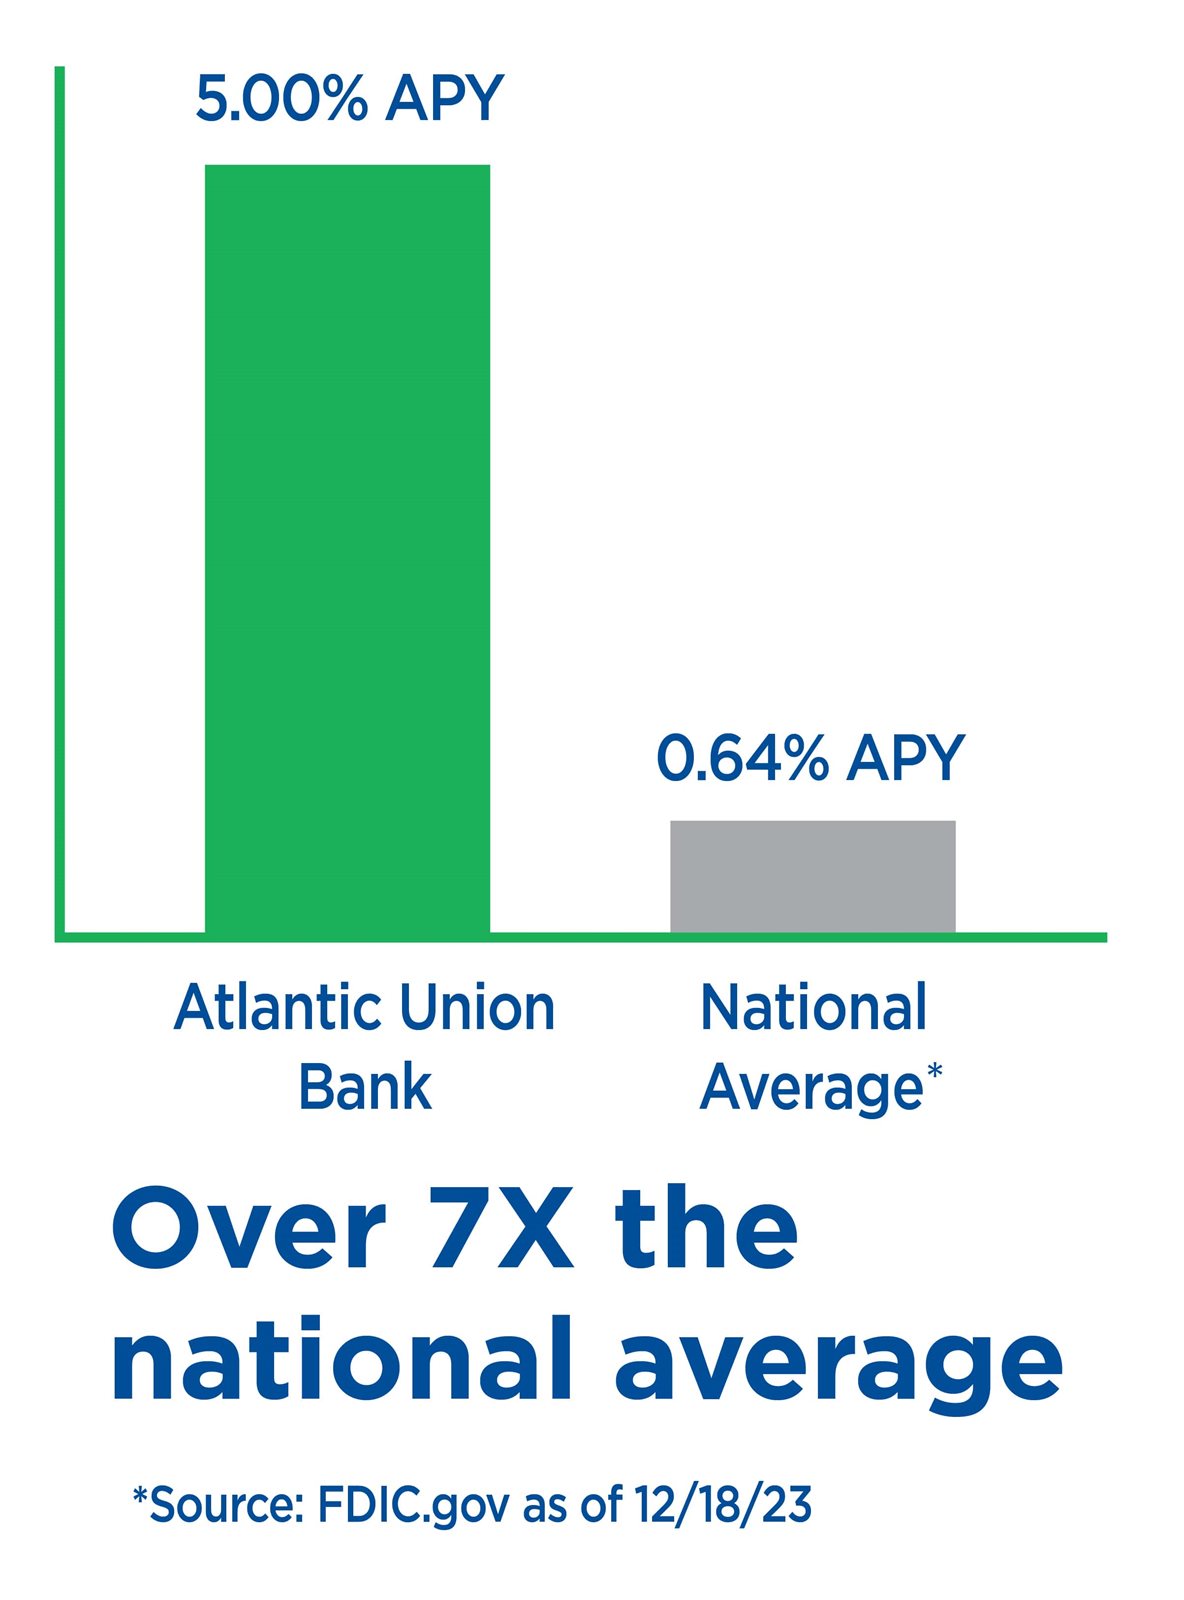 Money Market Comparison chart - Over 7X the national average